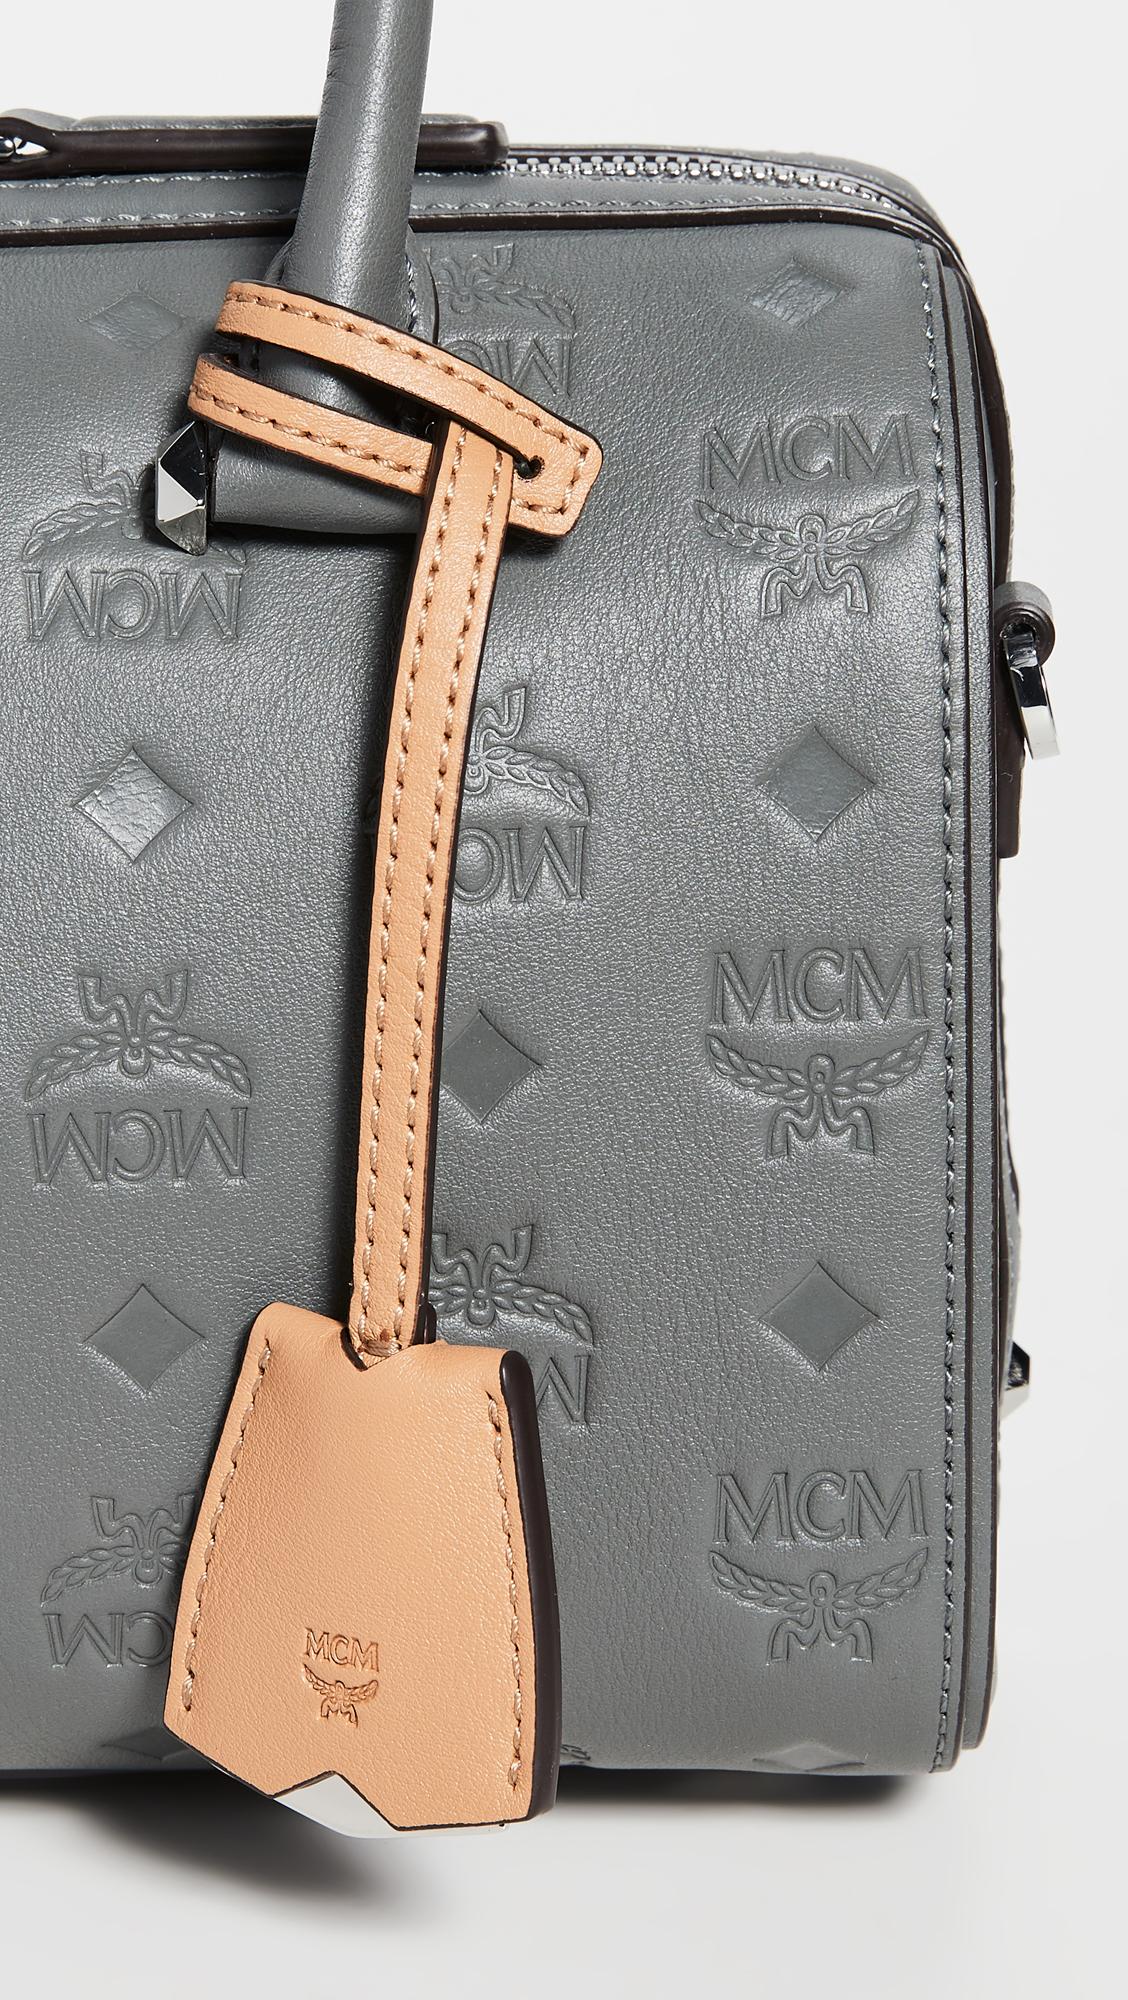 Mcm Boston Essential Monogrammed Small Leather Satchel In Golden Mango